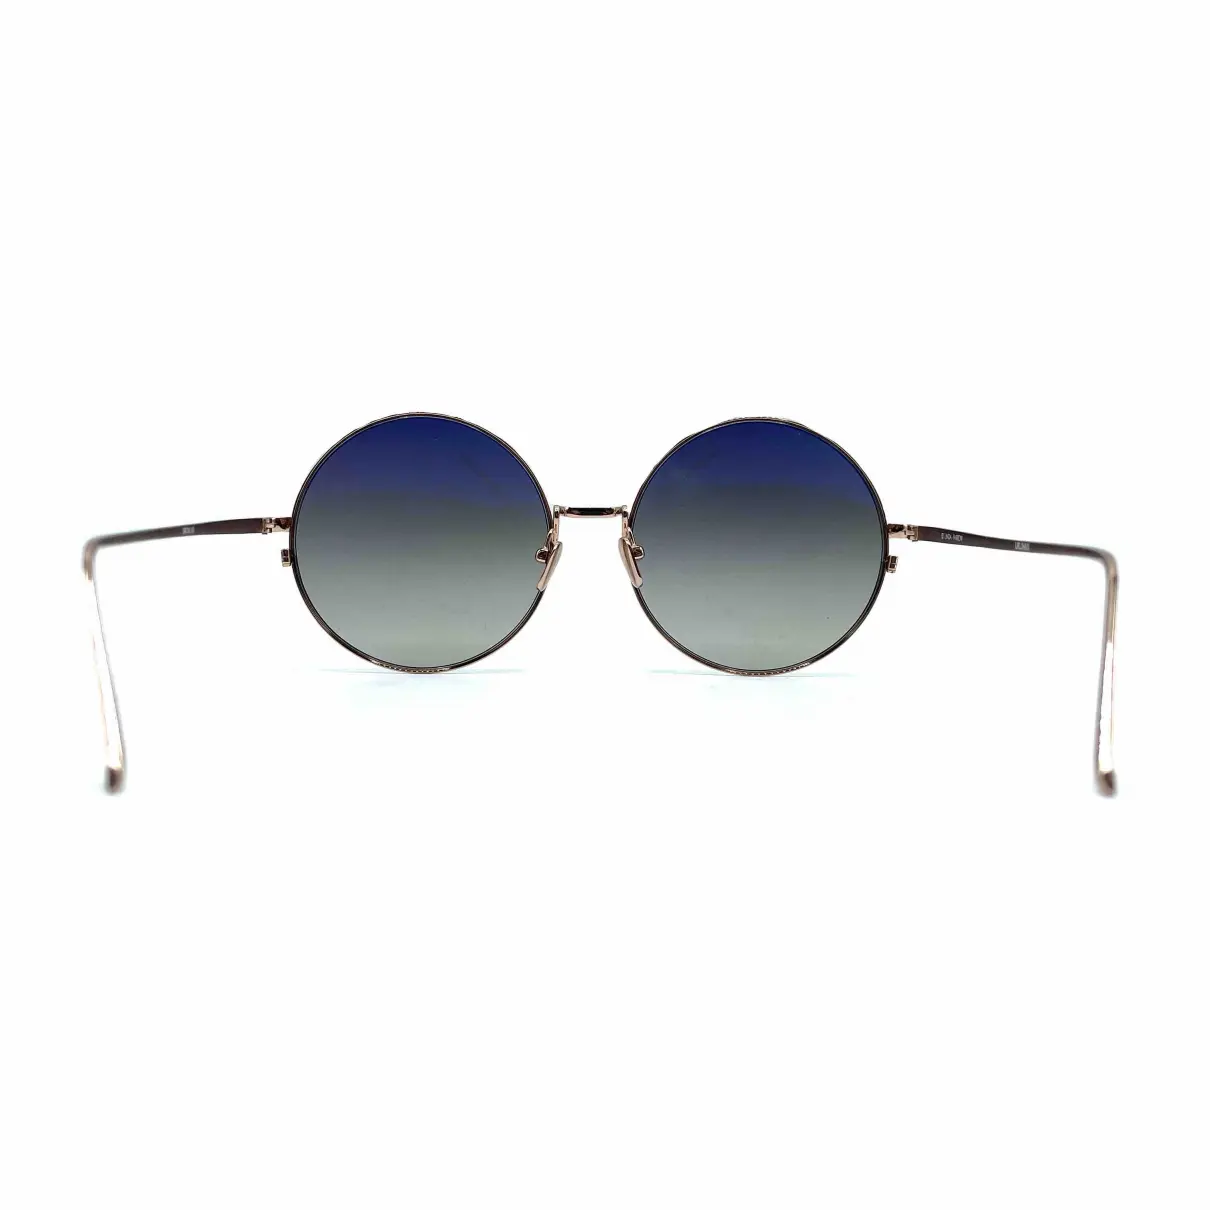 Buy Linda Farrow Oversized sunglasses online